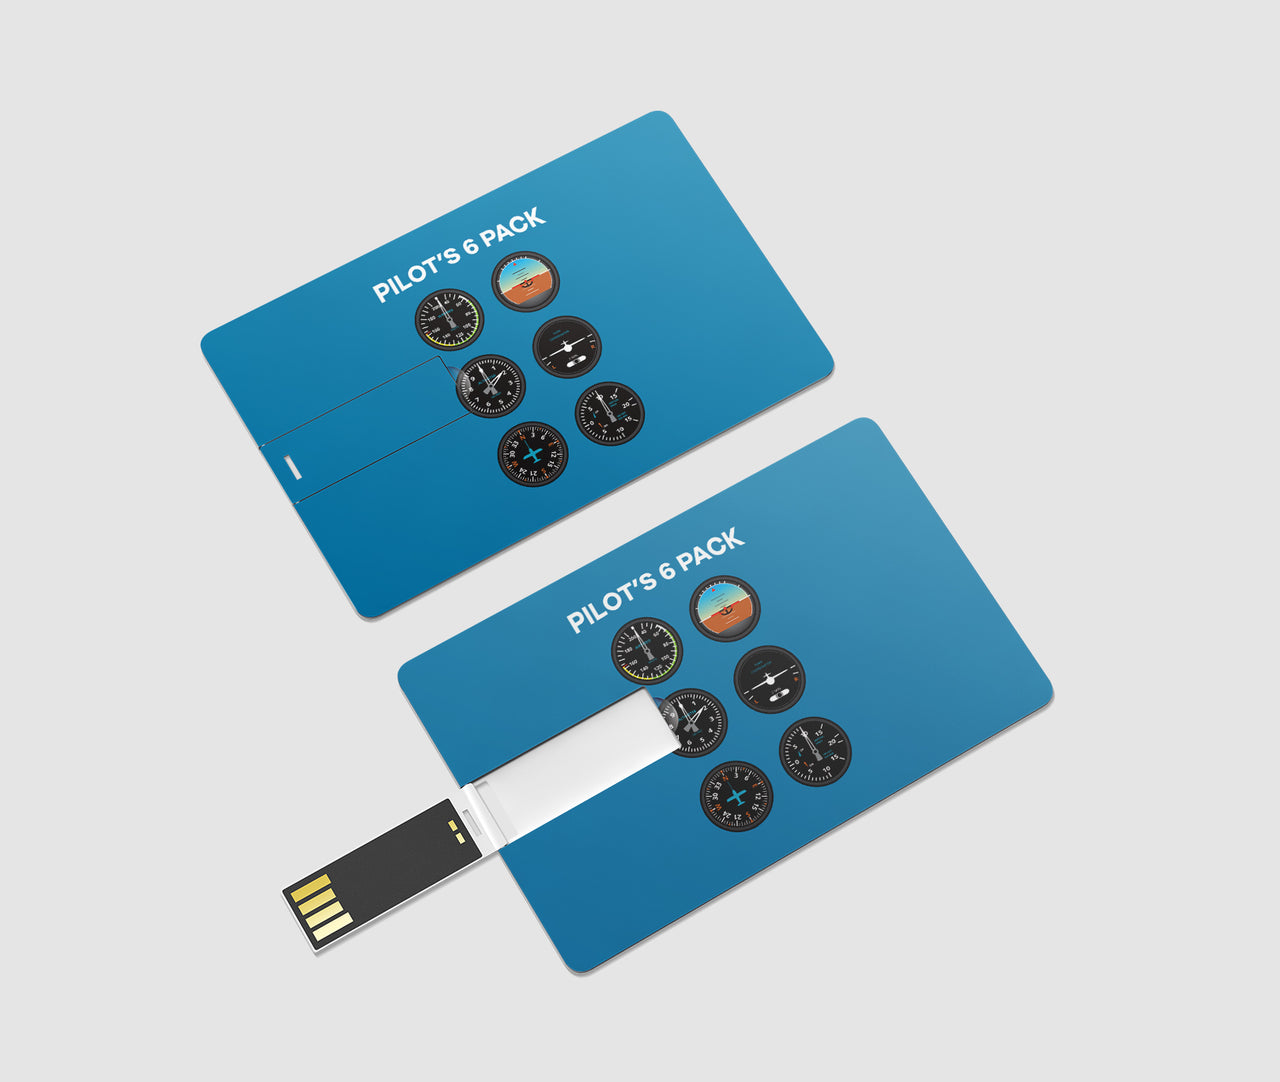 Pilot's 6 Pack Designed USB Cards